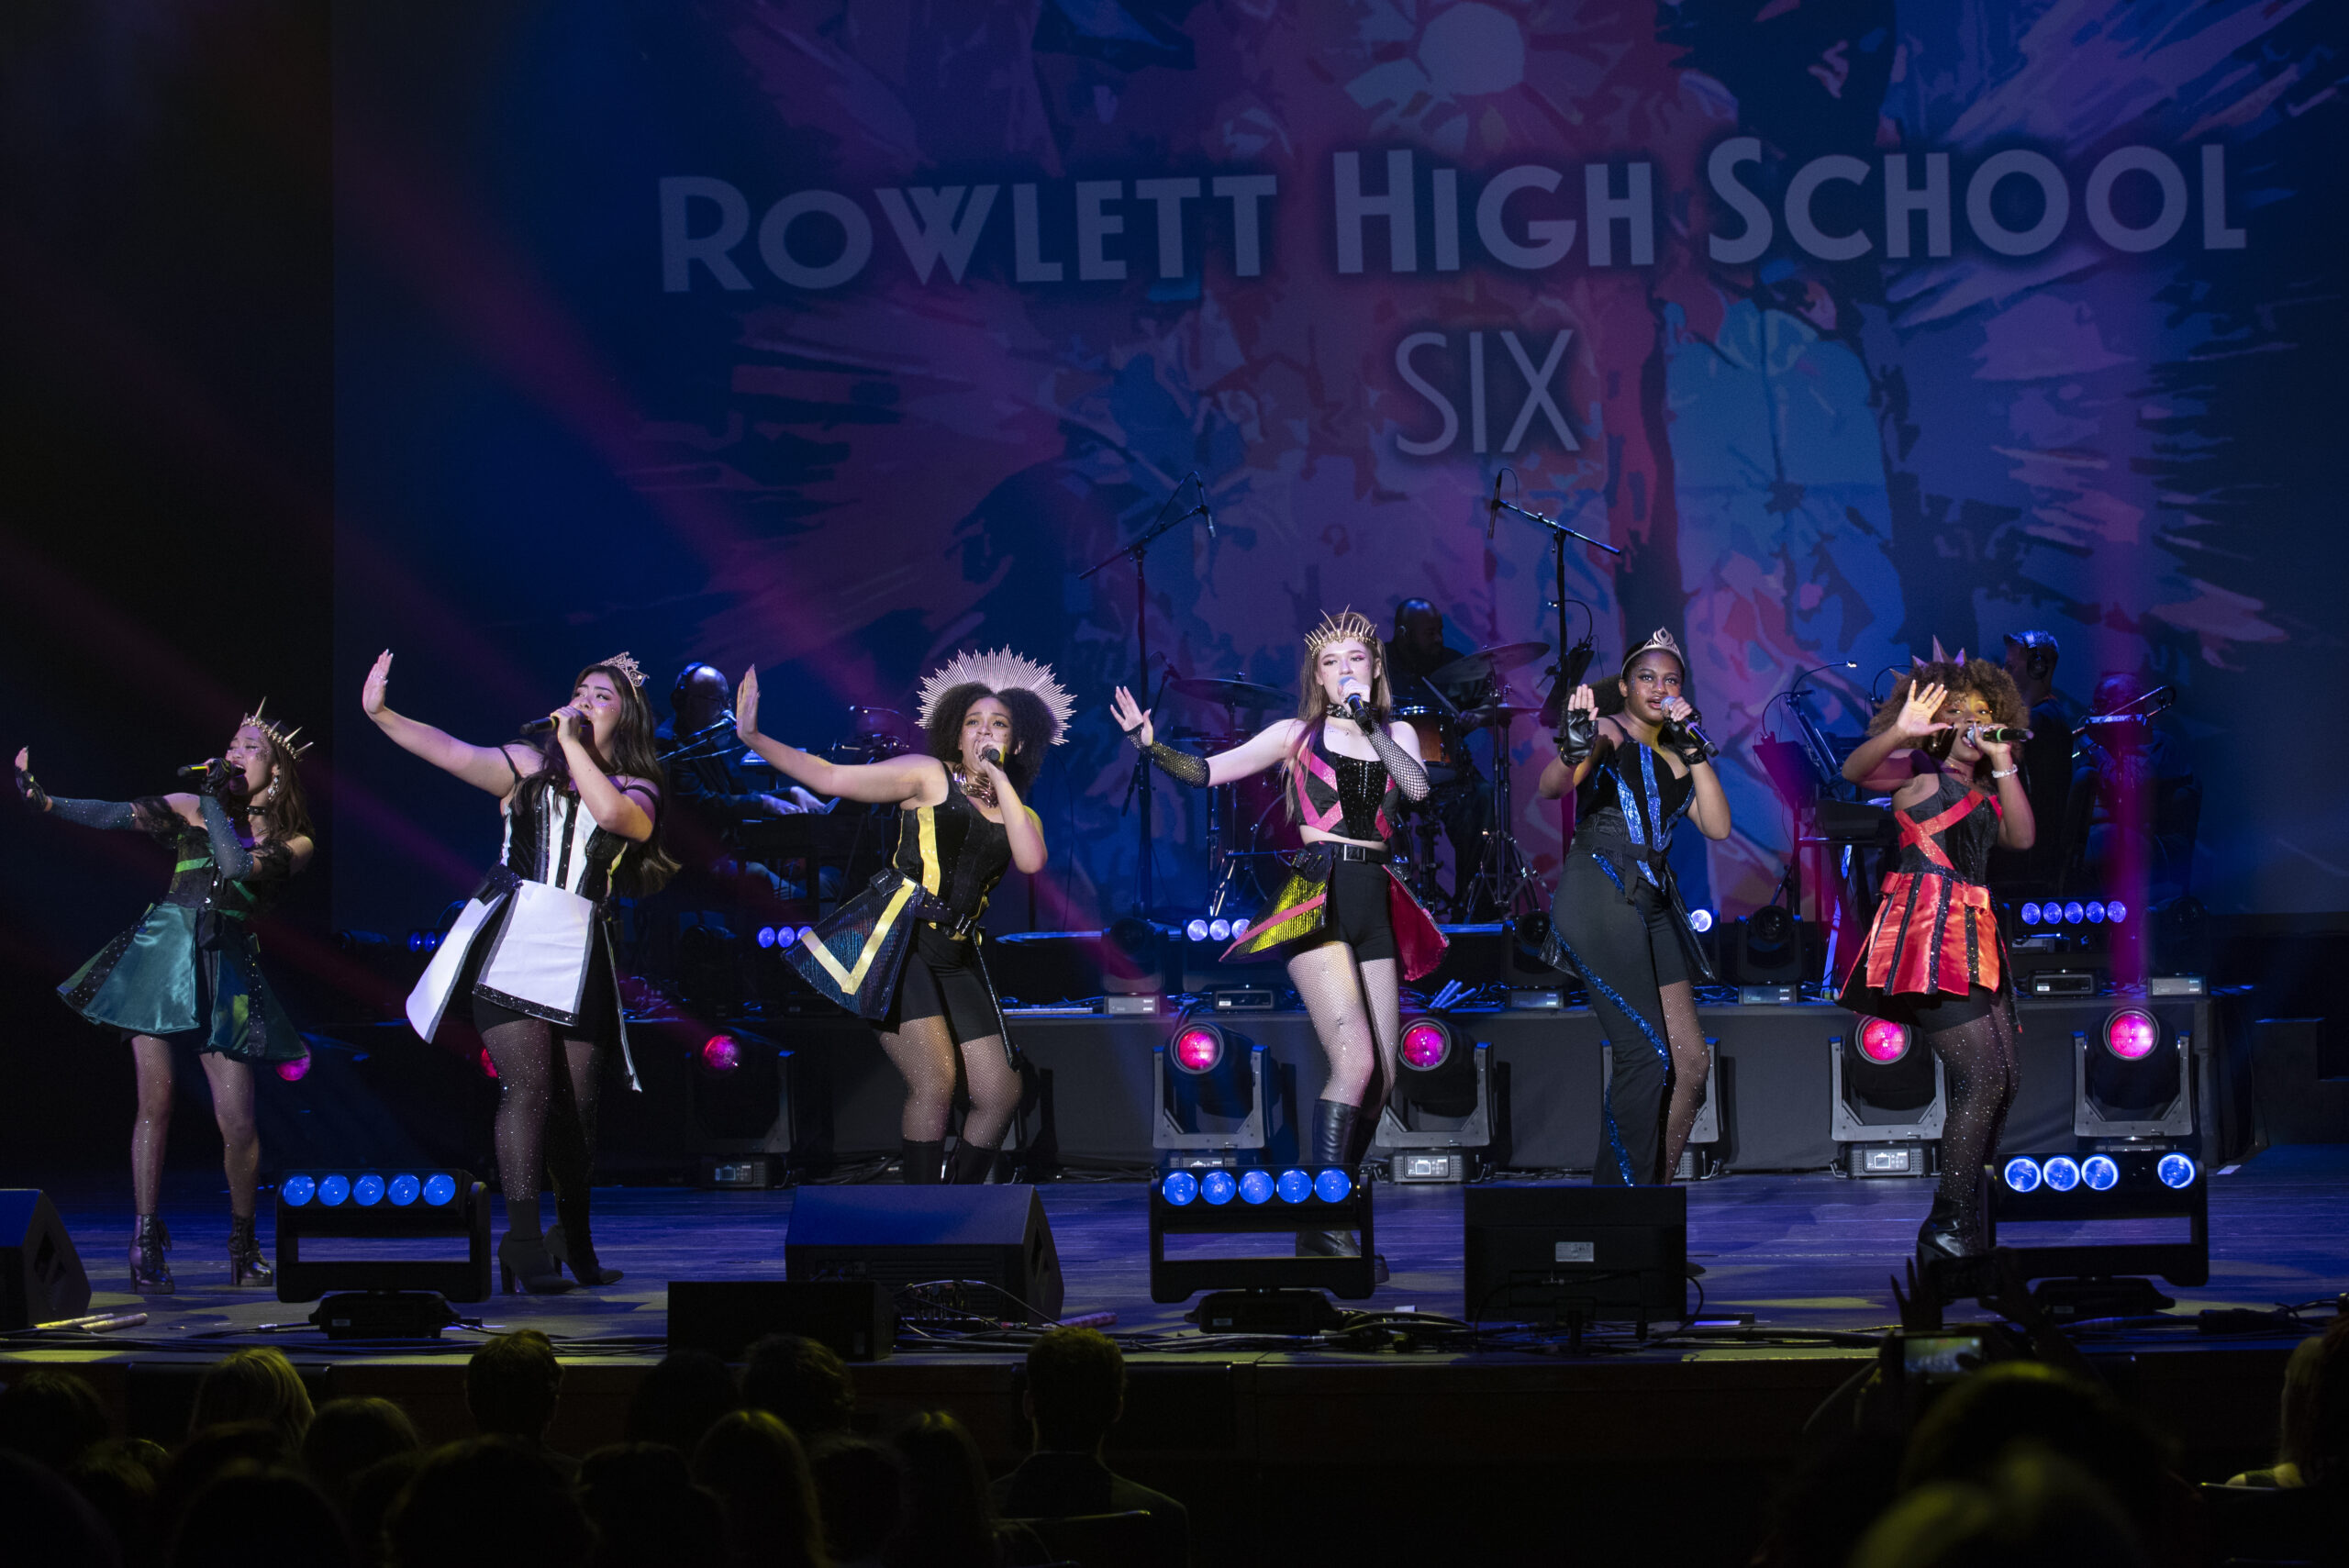 Outstanding-Musical-Winners-Rowlett-High-School-Six